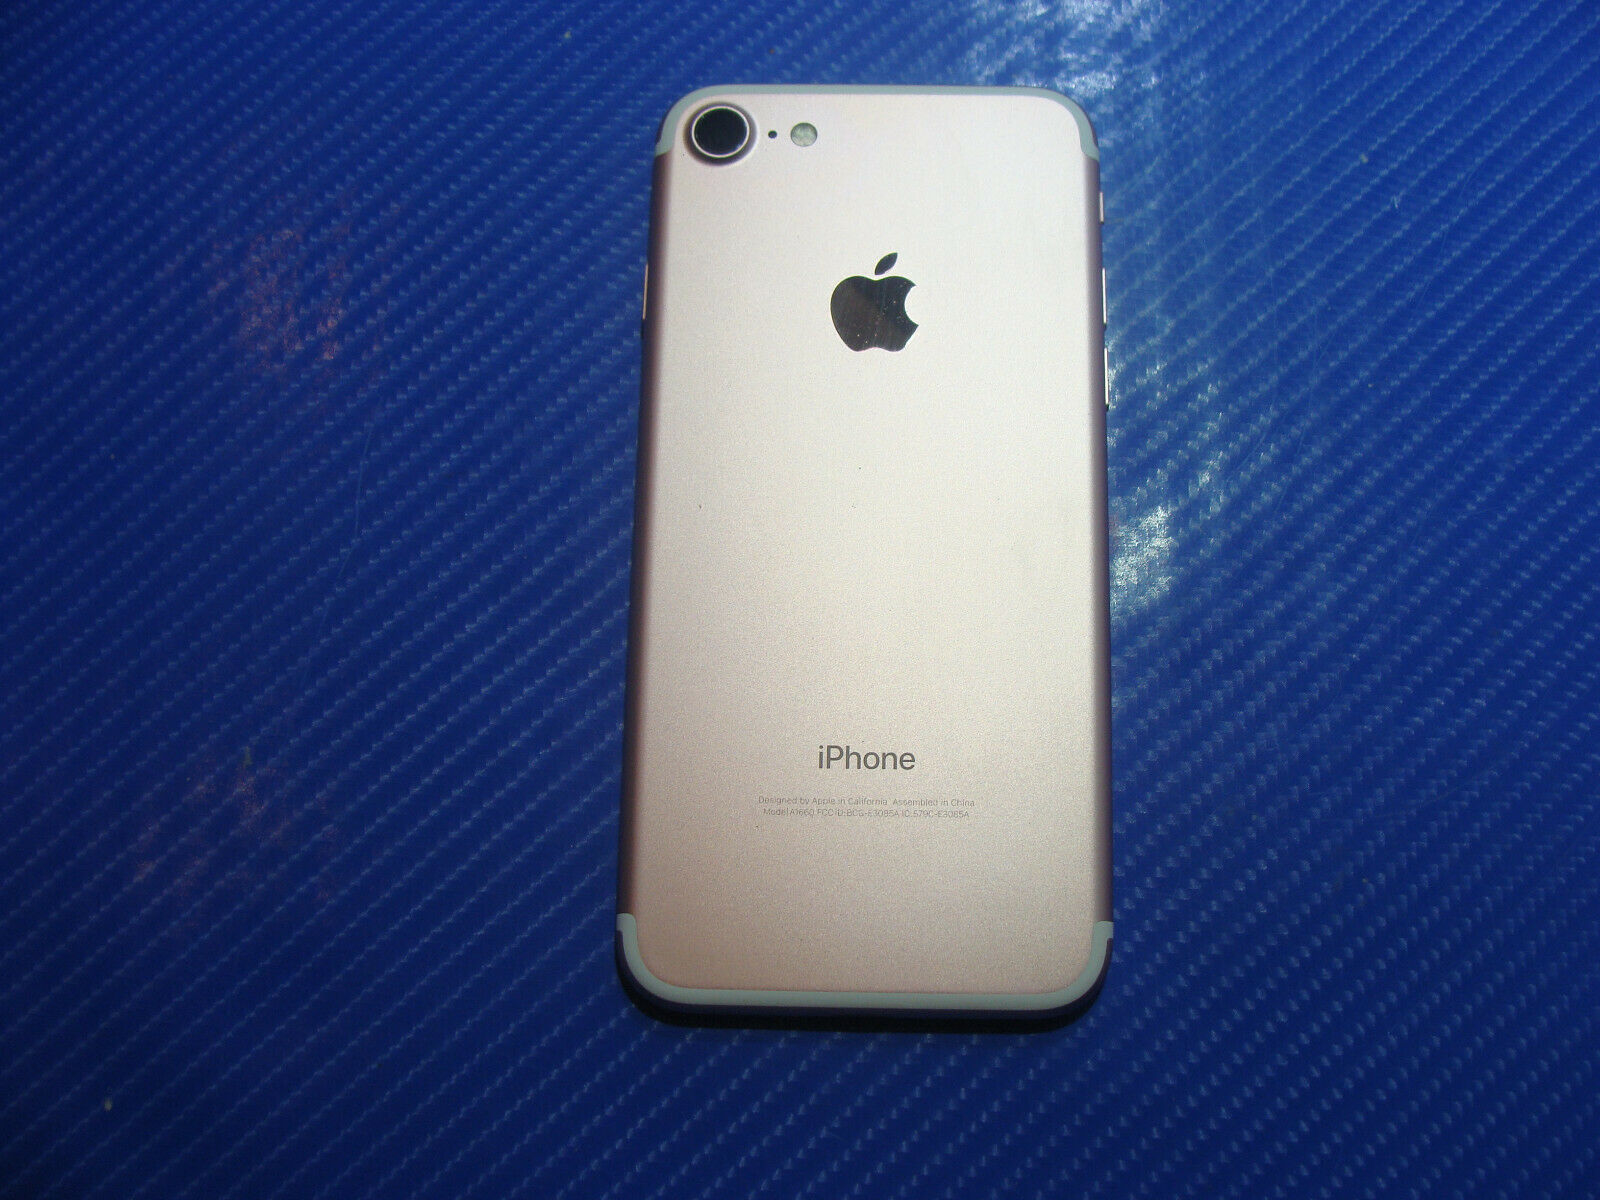 Apple iPhone 7 A1660 4.7